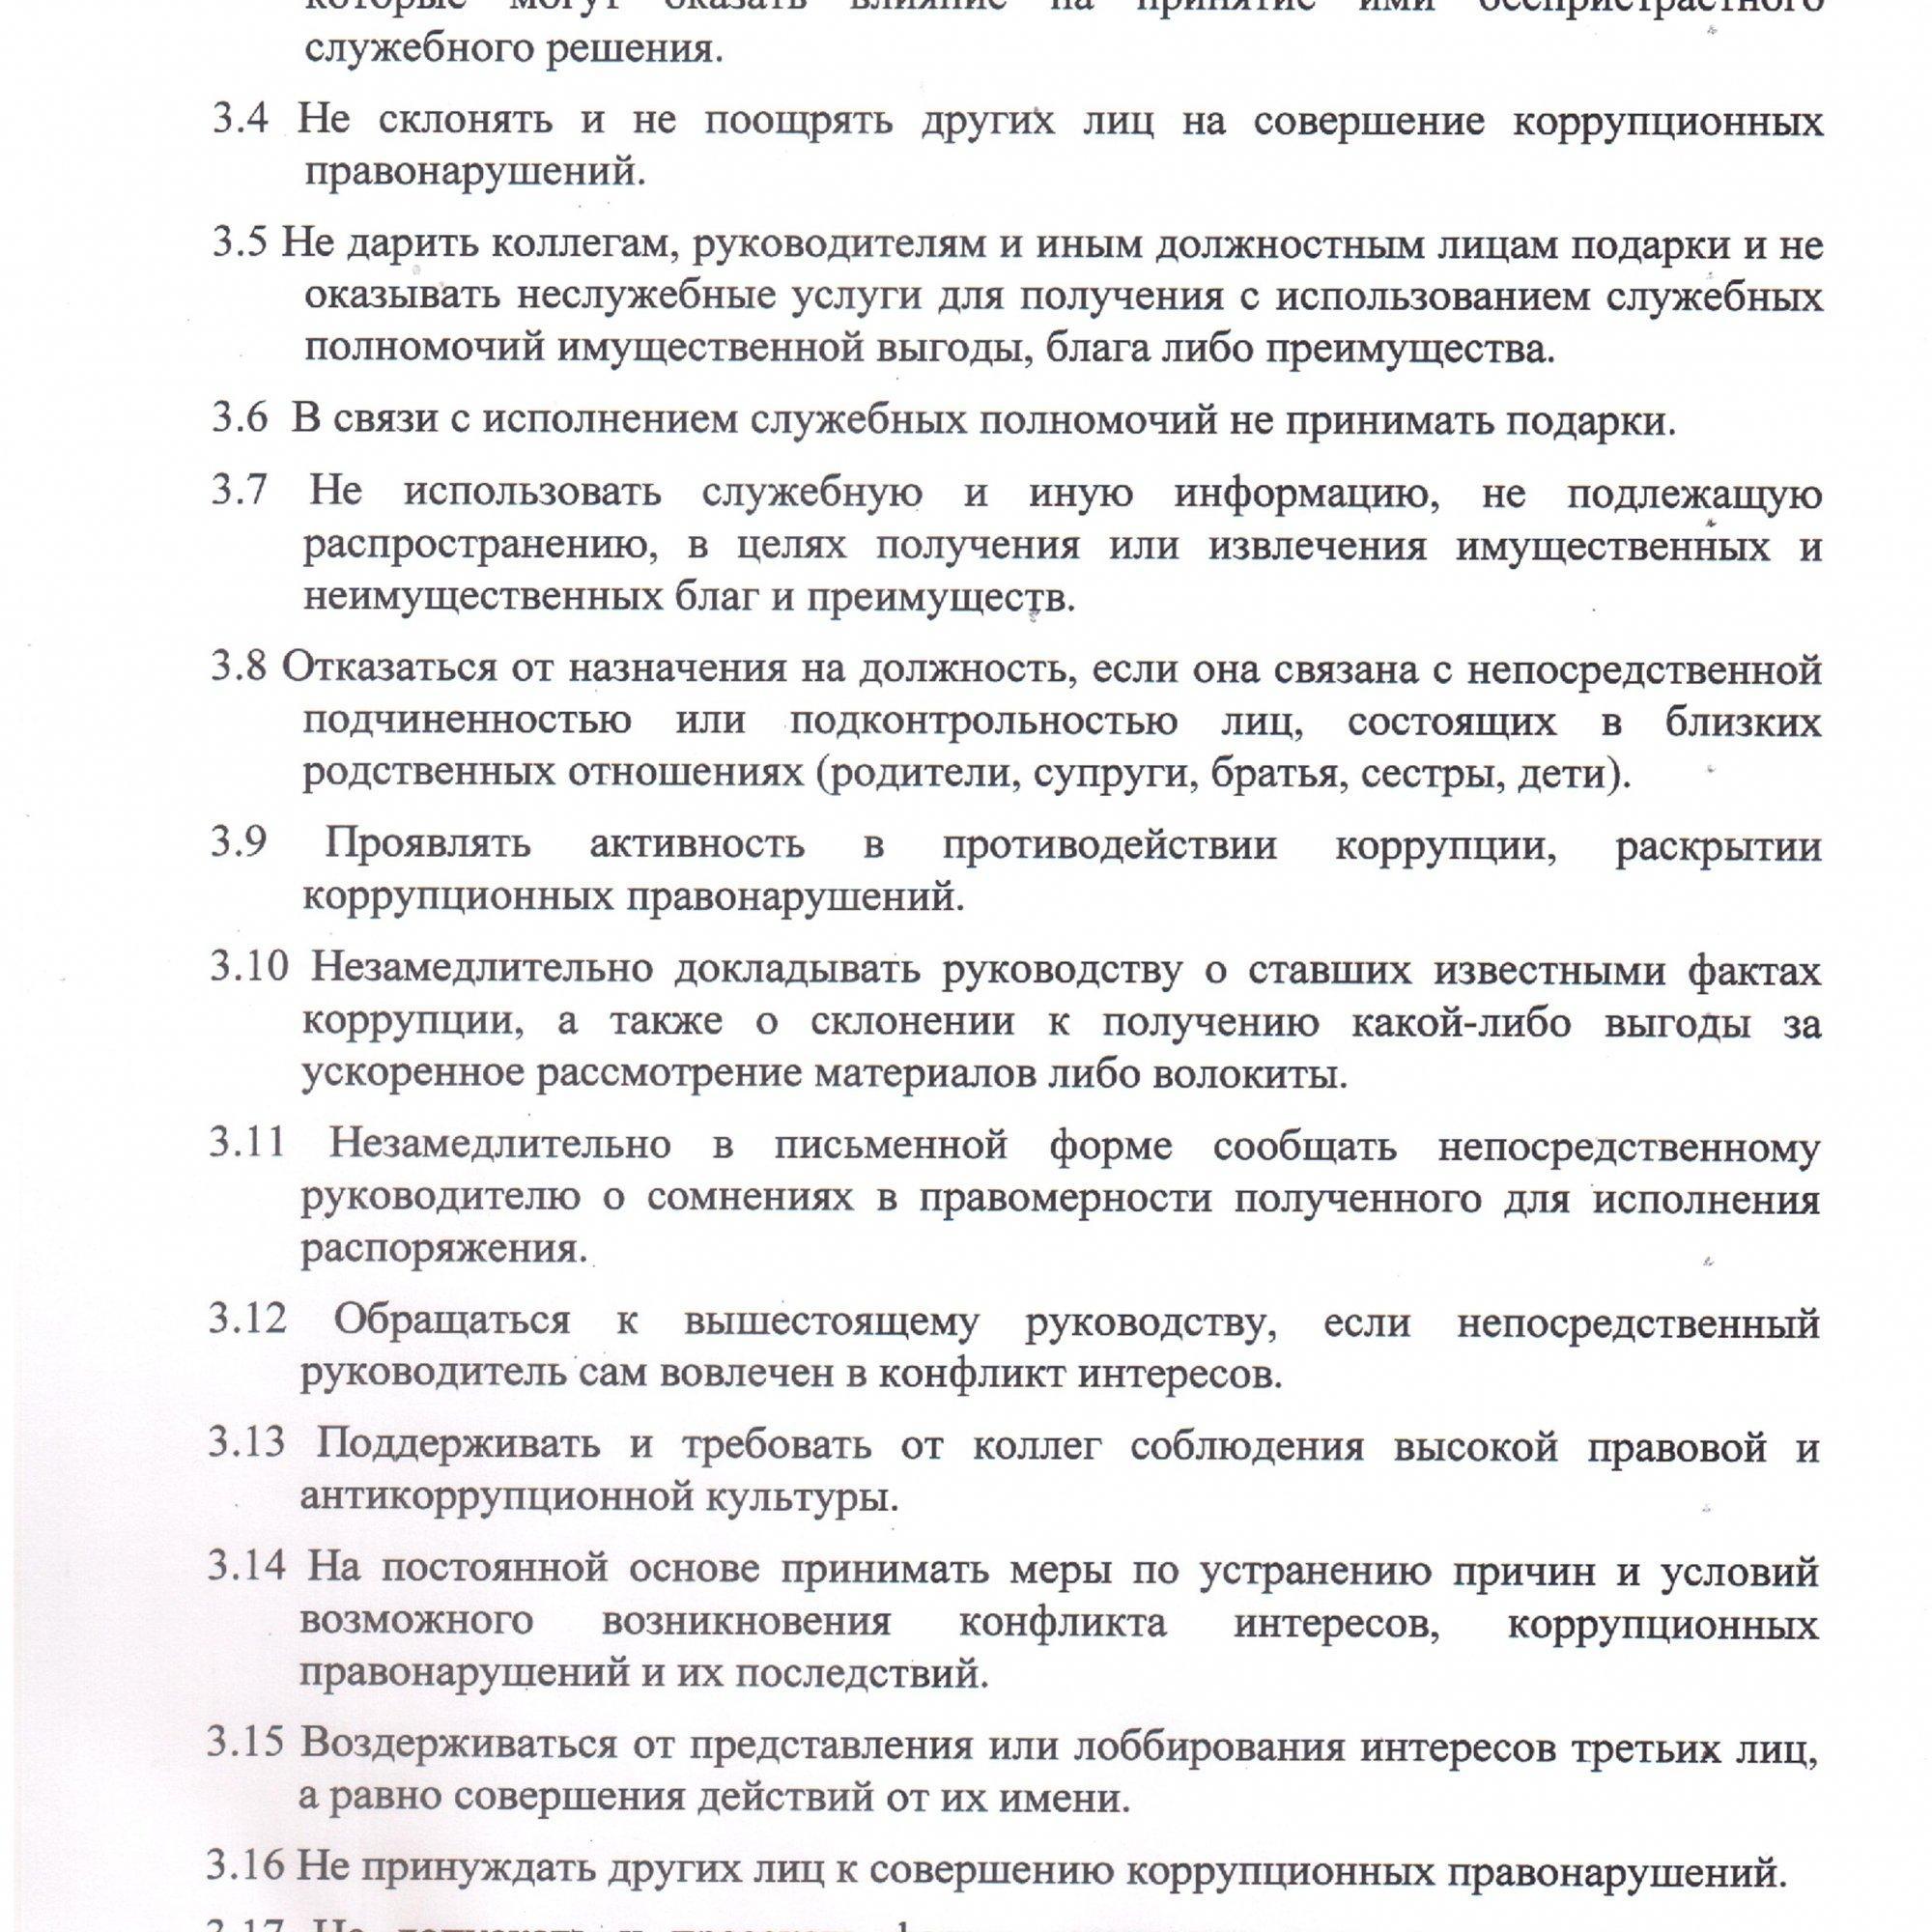 Антикоррупционный стандарт ШЛ№71